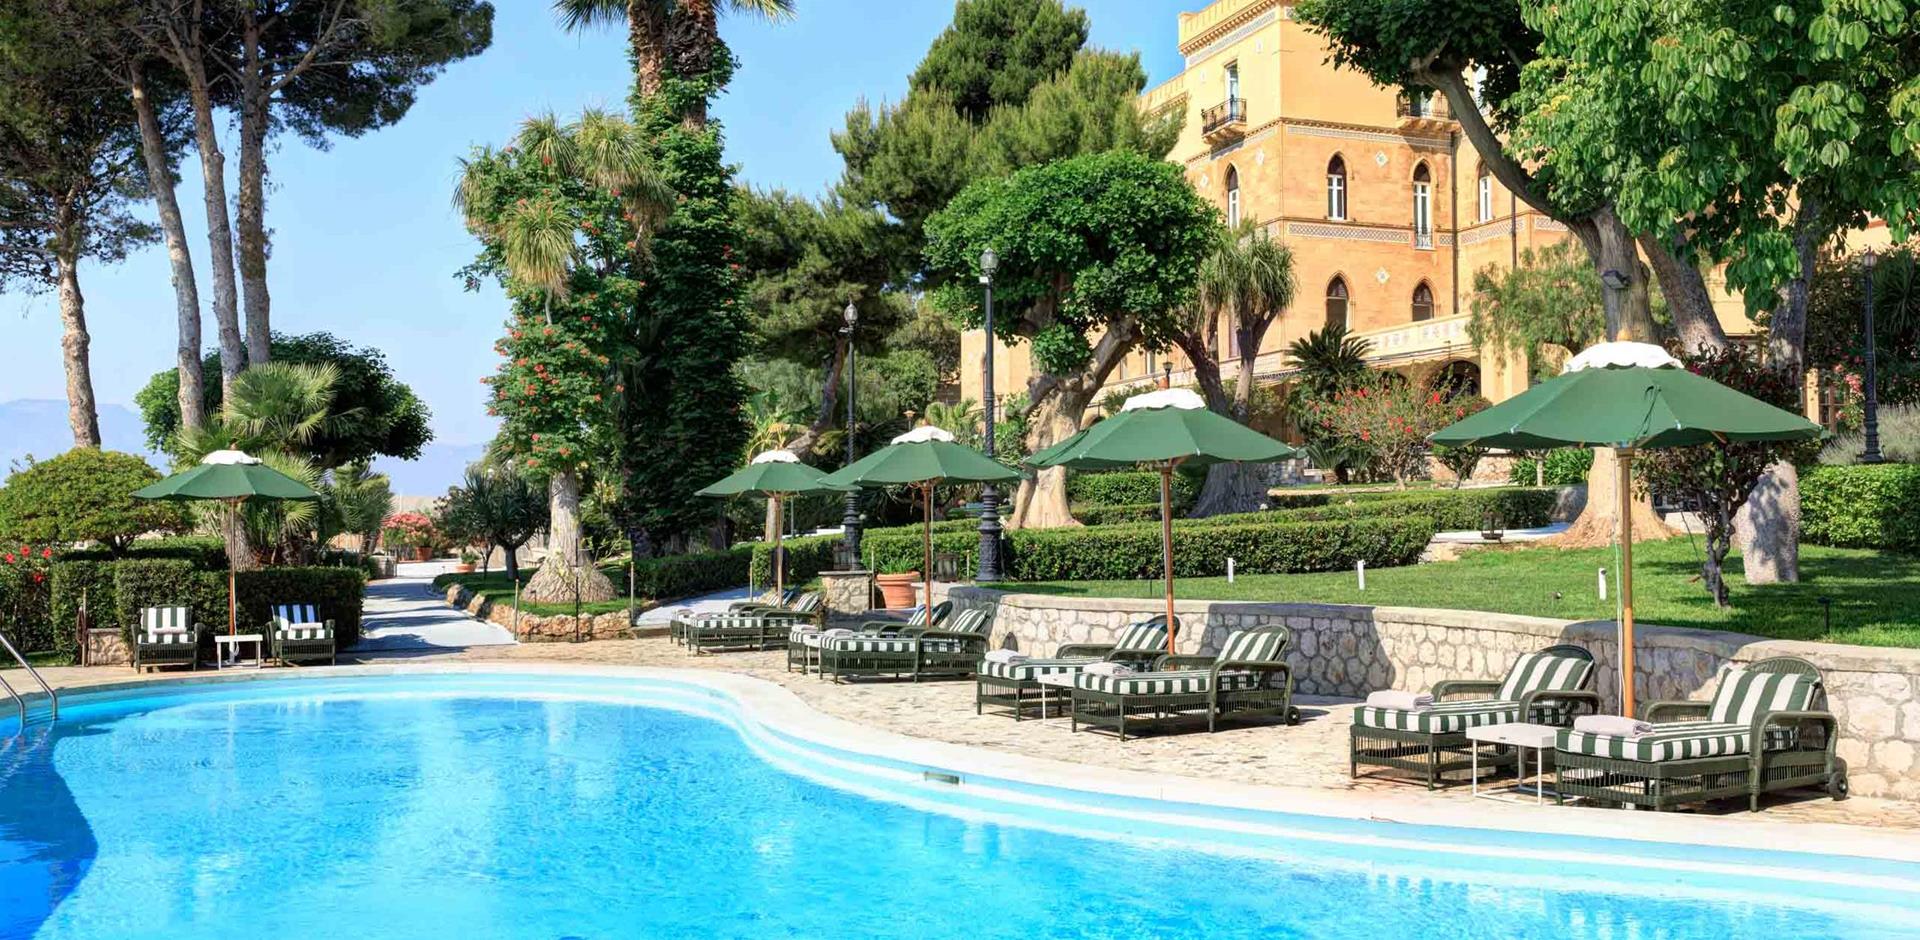 Pool area, Villa Igiea, Palermo, Sicily, Italy, Europe